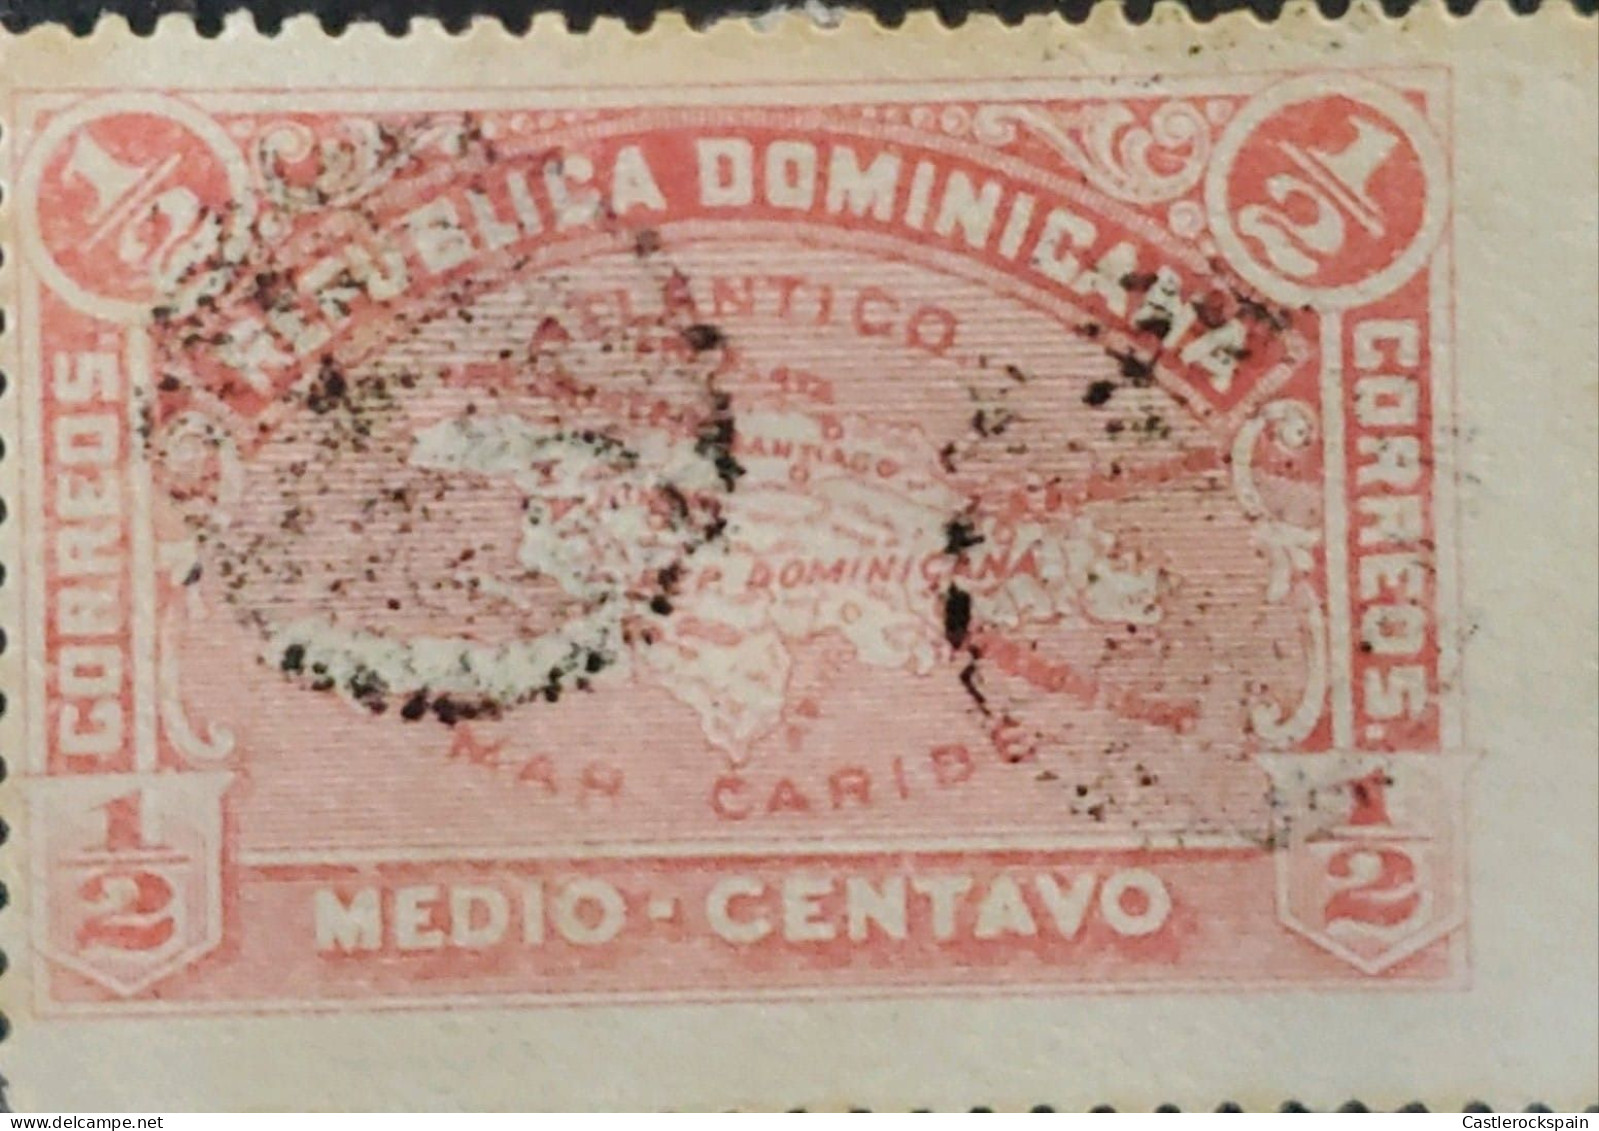 OH) 1900 DOMINICAN REPUBLIC, MAP, ERROR,  USED, EXCELLENT CONDITION - Dominican Republic